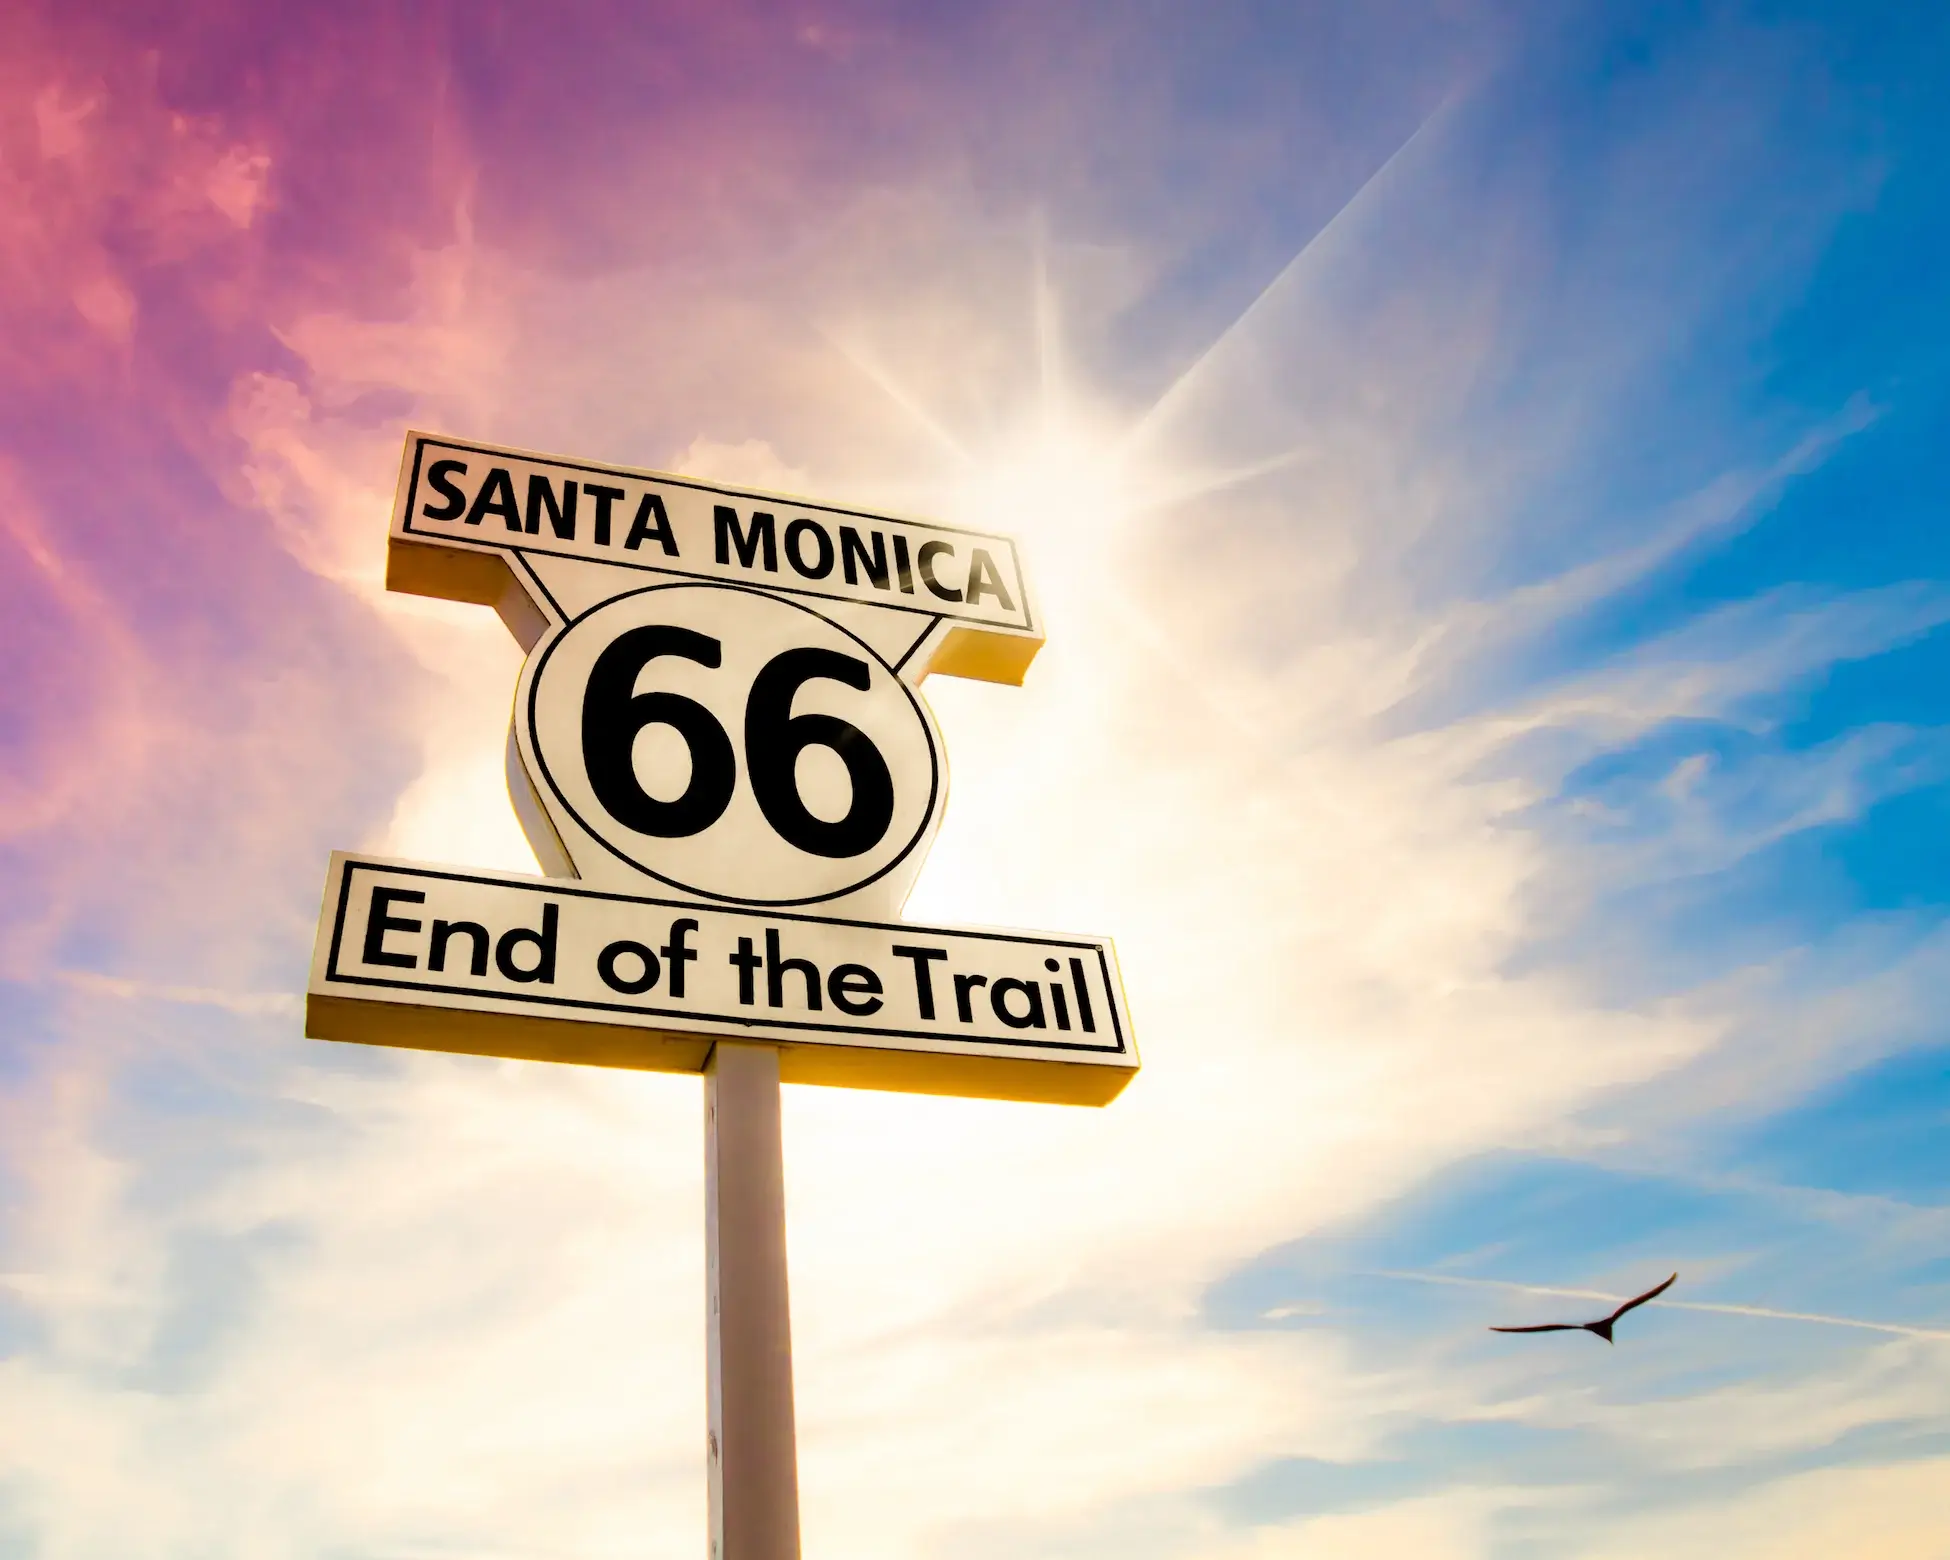 Historic Route 66 sign at Santa Monica California